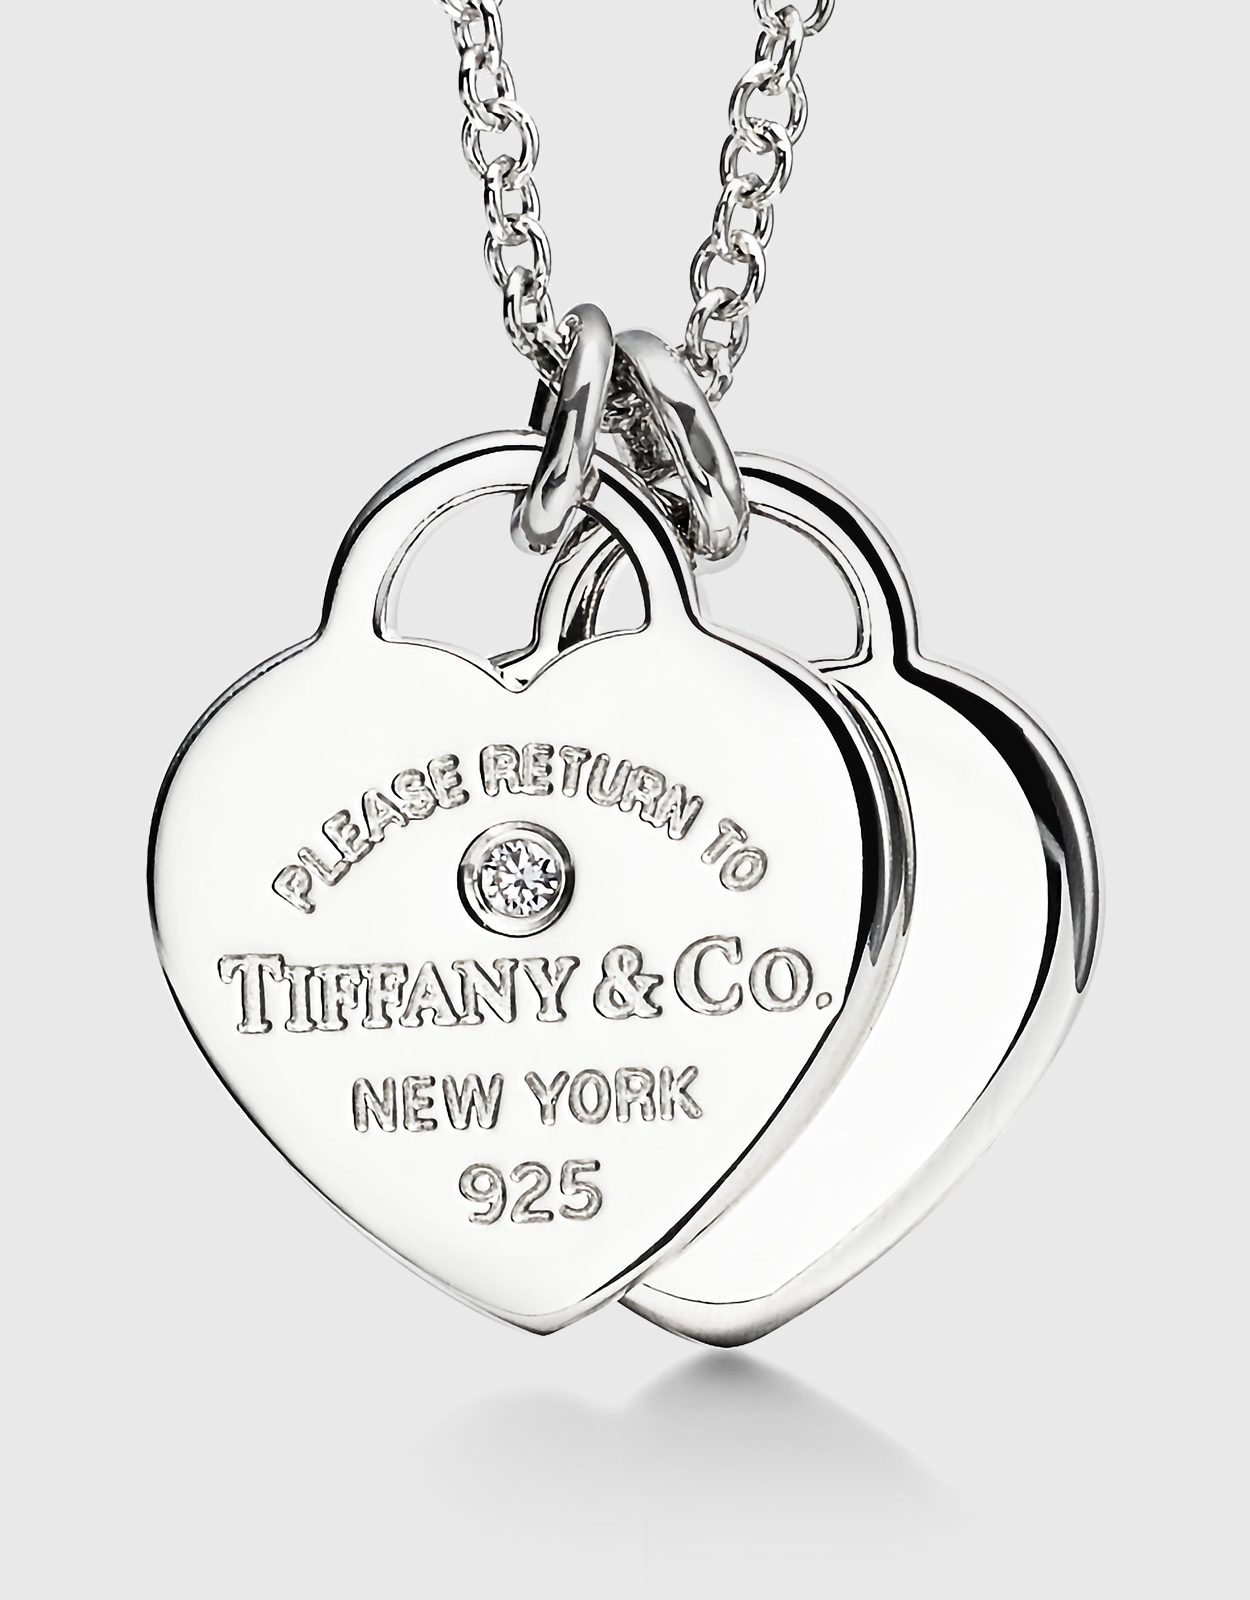 Tiffany & Co.Necklace  Tiffany and co jewelry, Tiffany and co necklace,  Dream jewelry